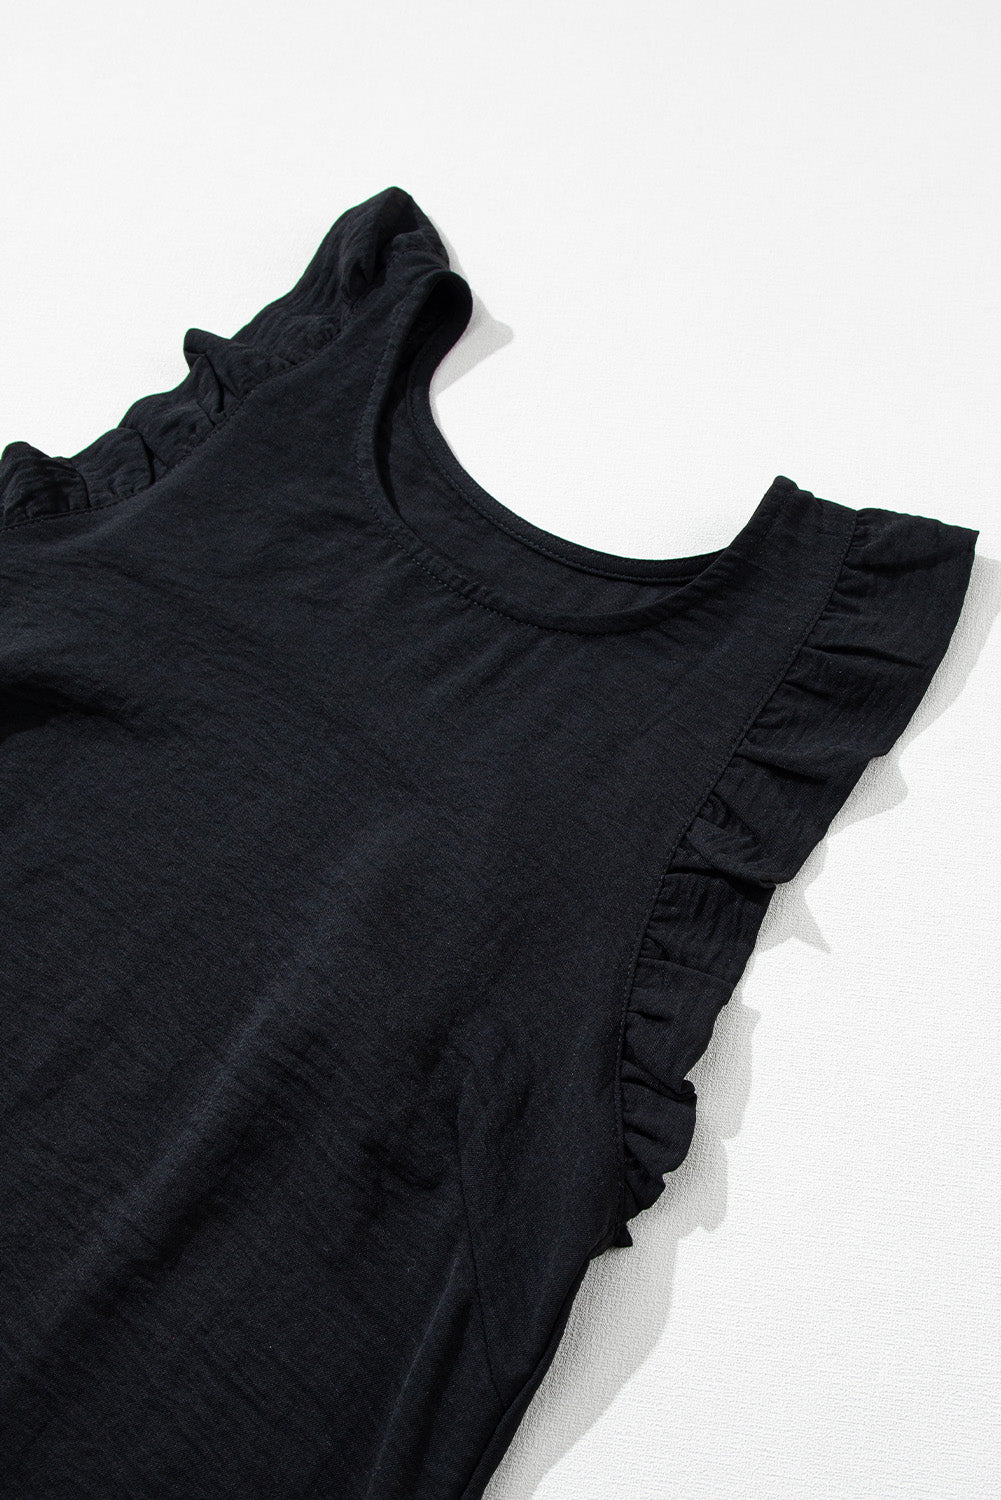 Black Ruffled Sleeveless Mini Dress